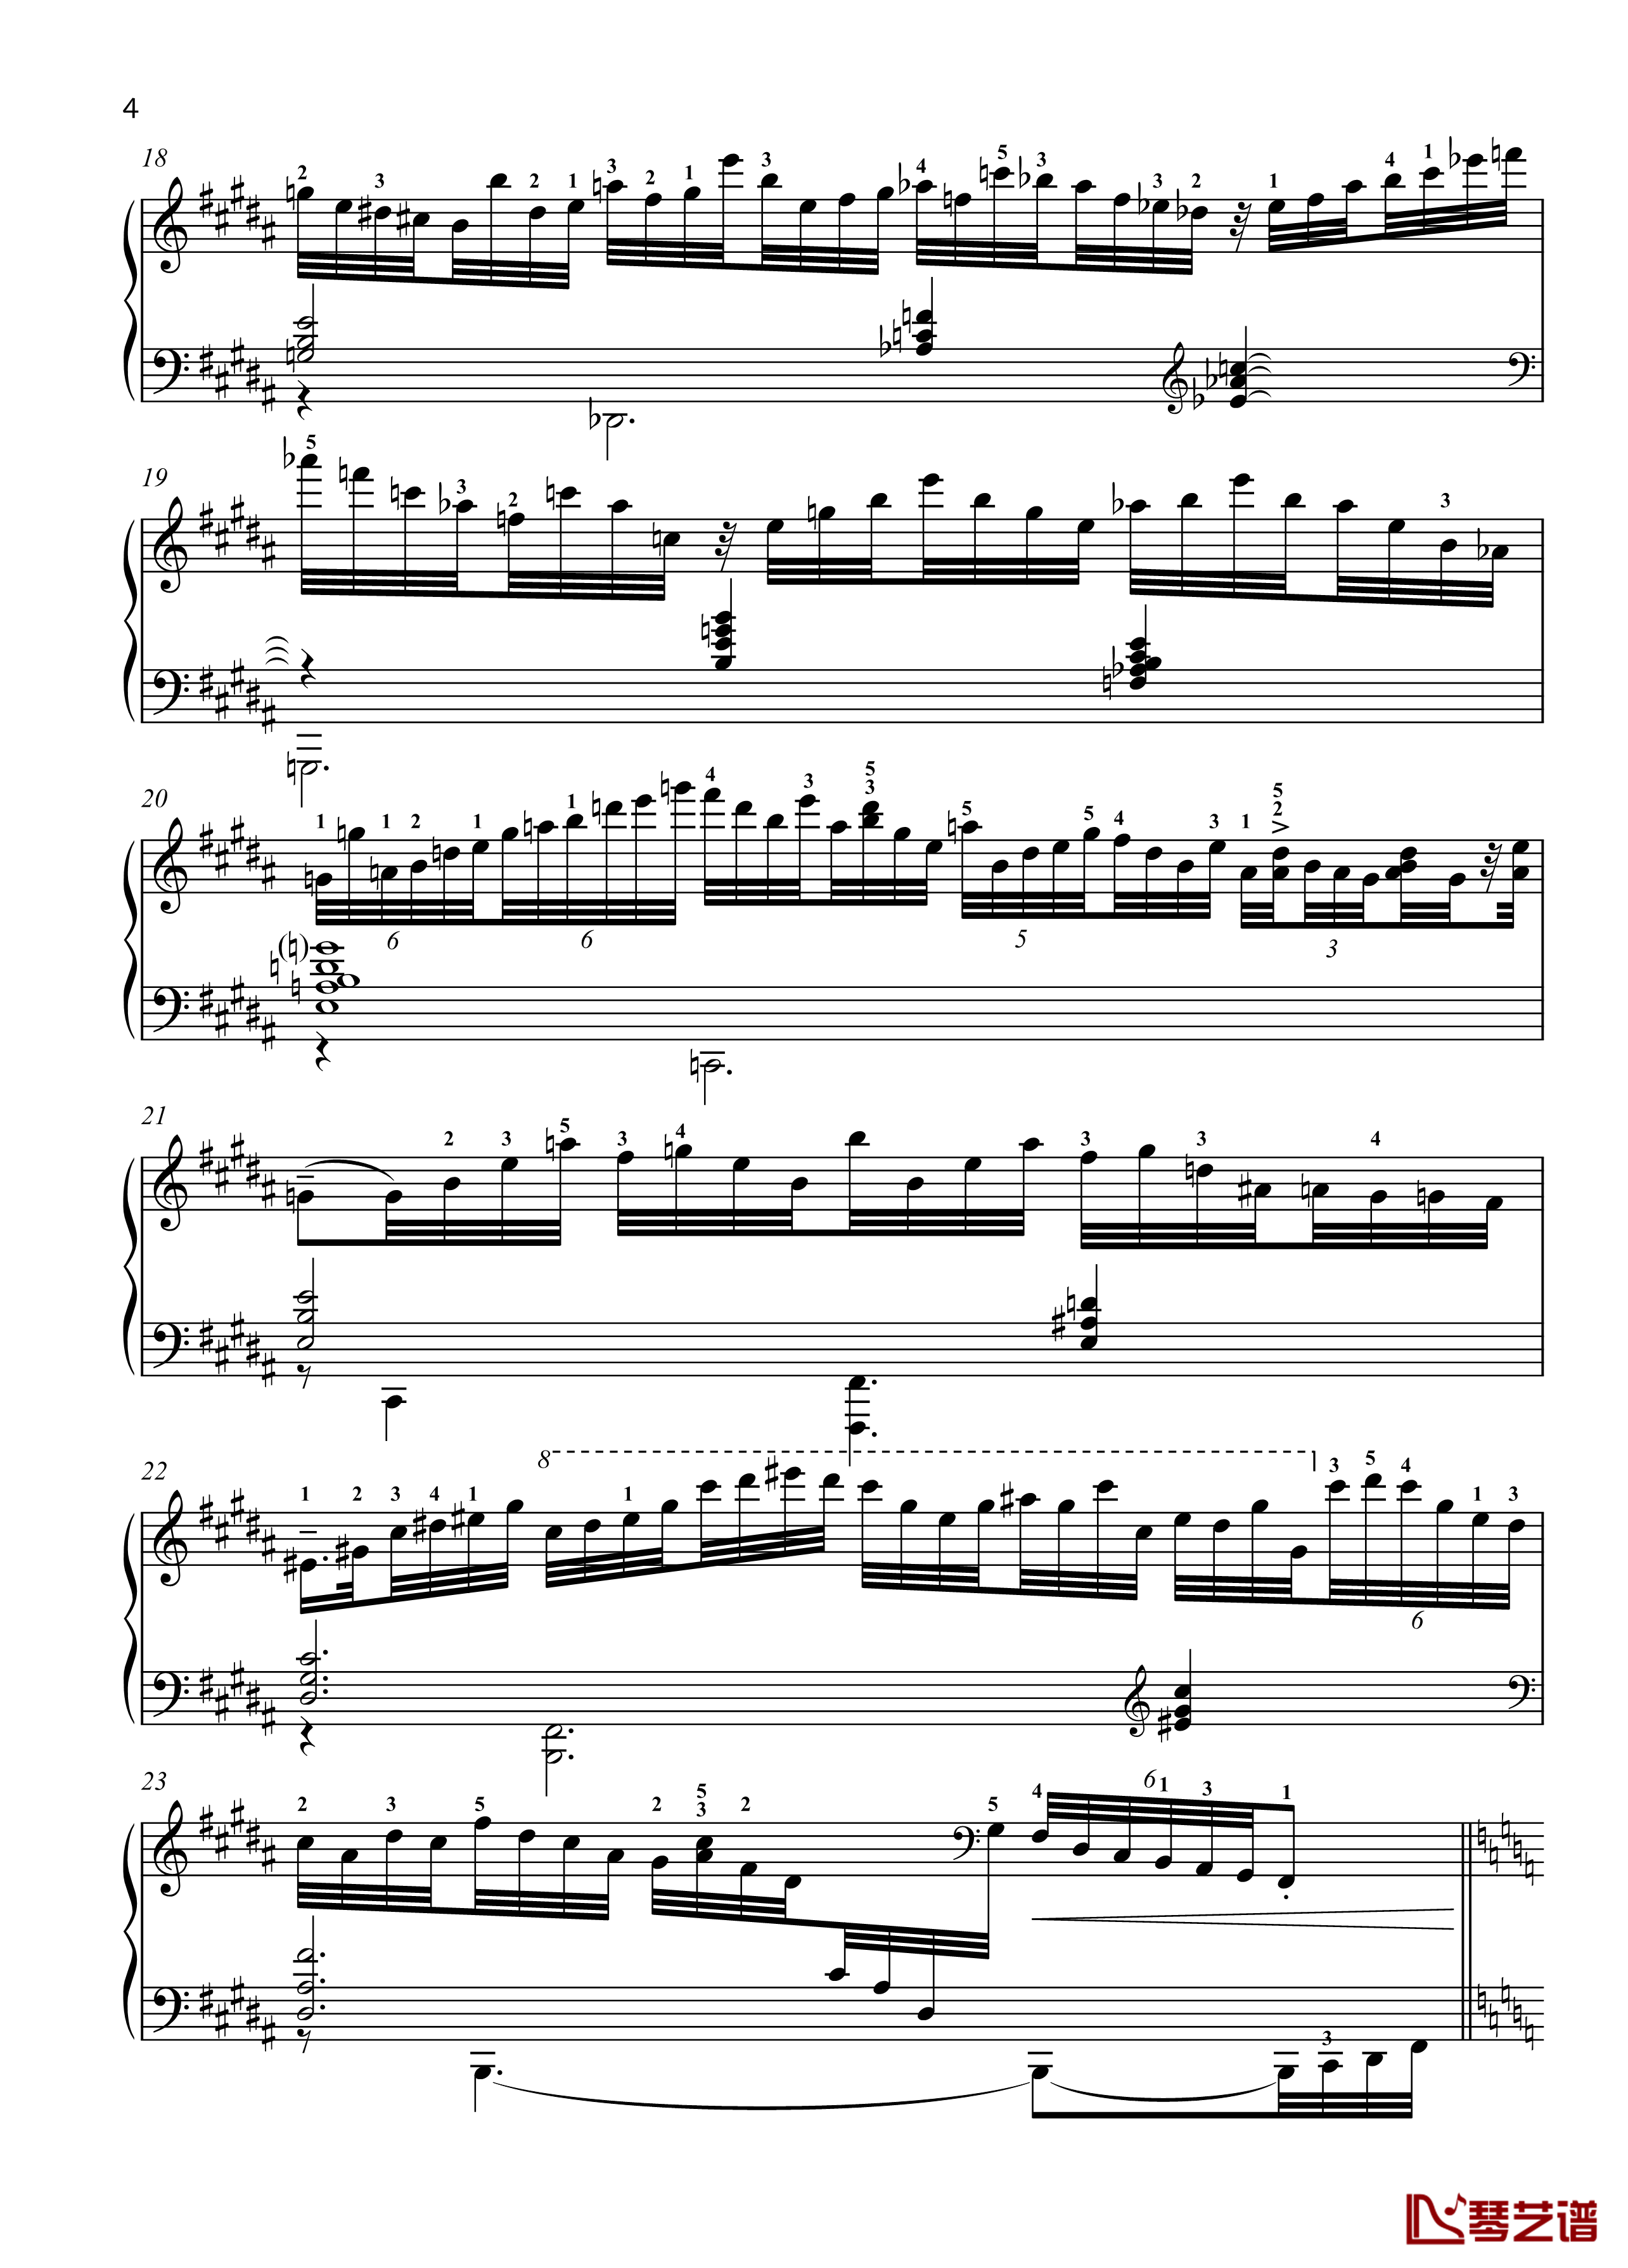 No. 4. Reminiscence钢琴谱-带指法-八首音乐会练习曲  Eight Concert ?tudes Op 40 - -爵士-尼古拉·凯帕斯汀4